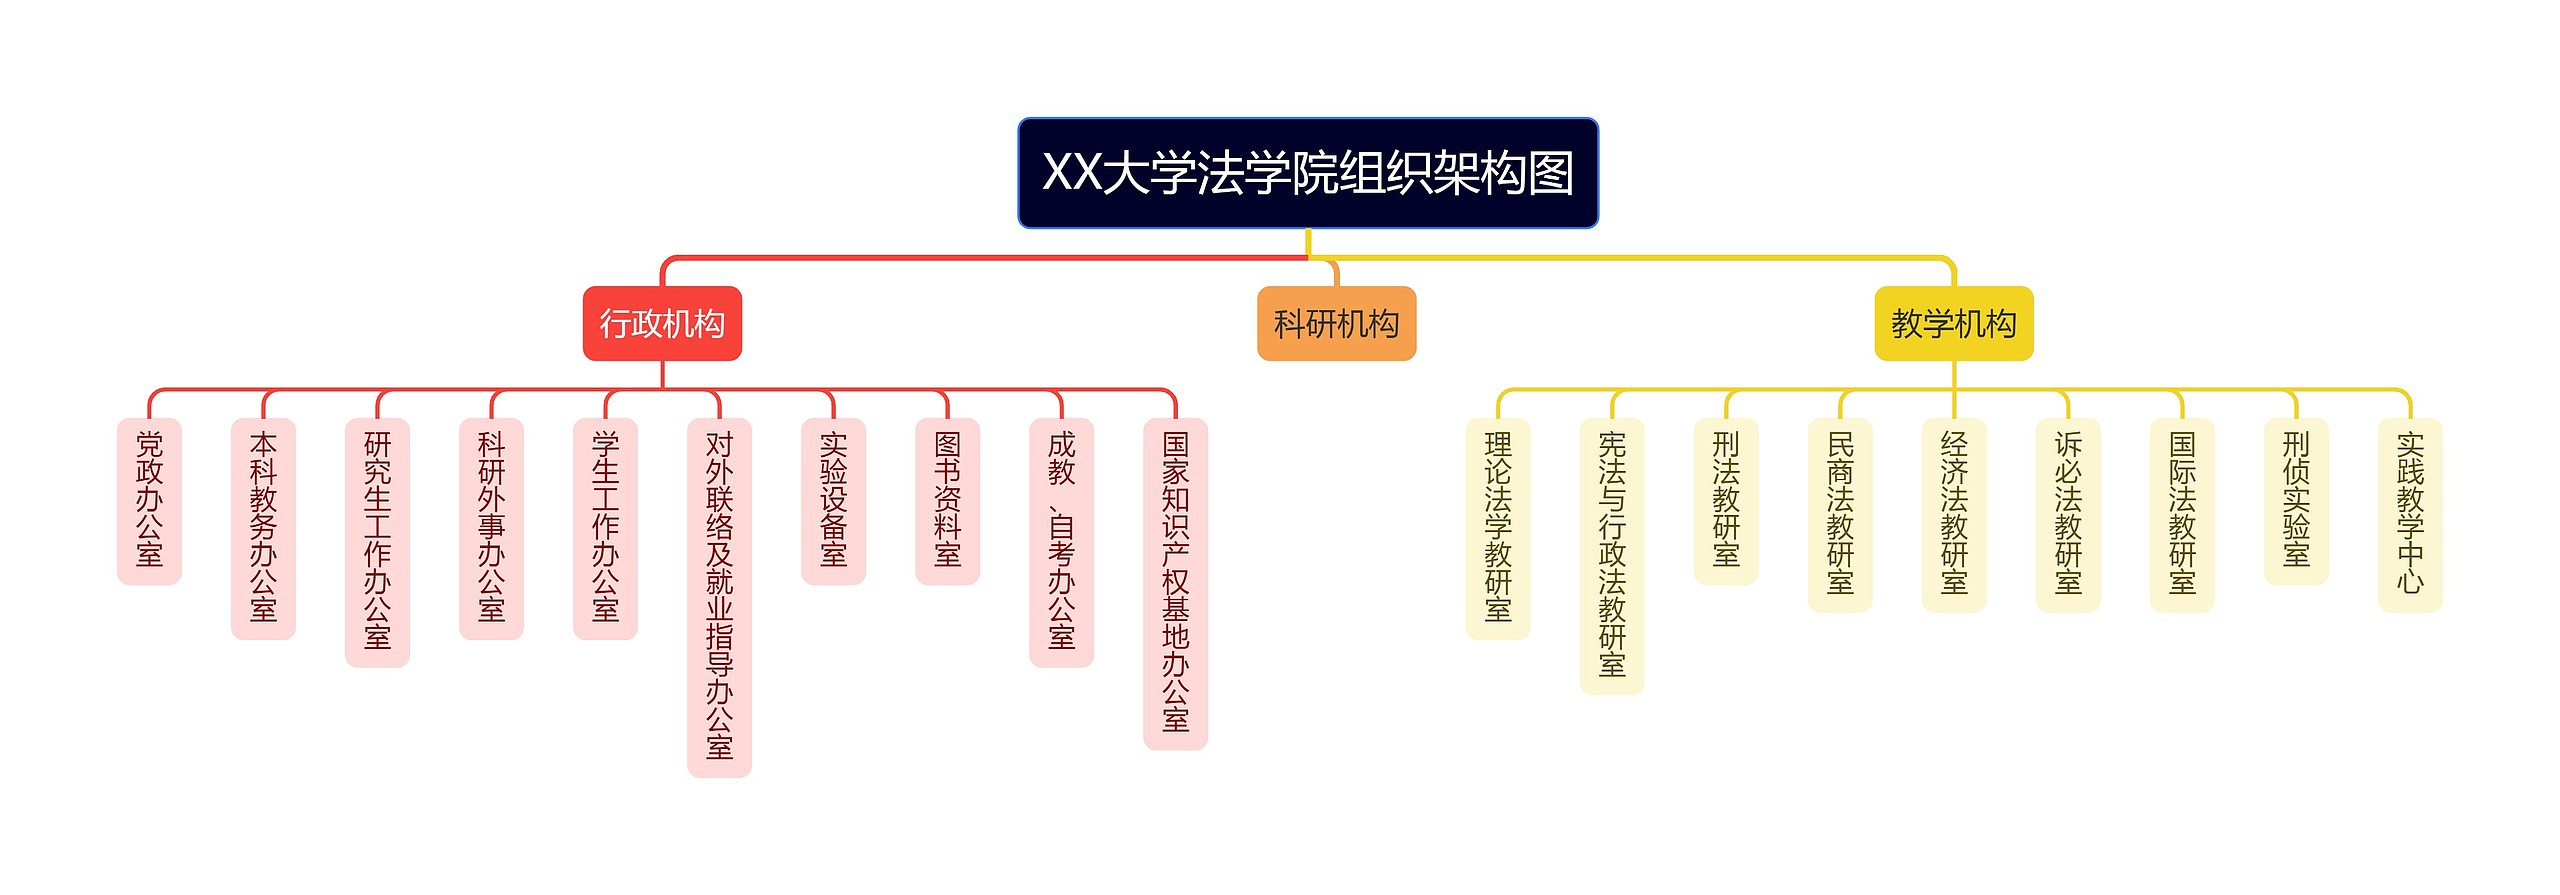 XX大学法学院组织架构图